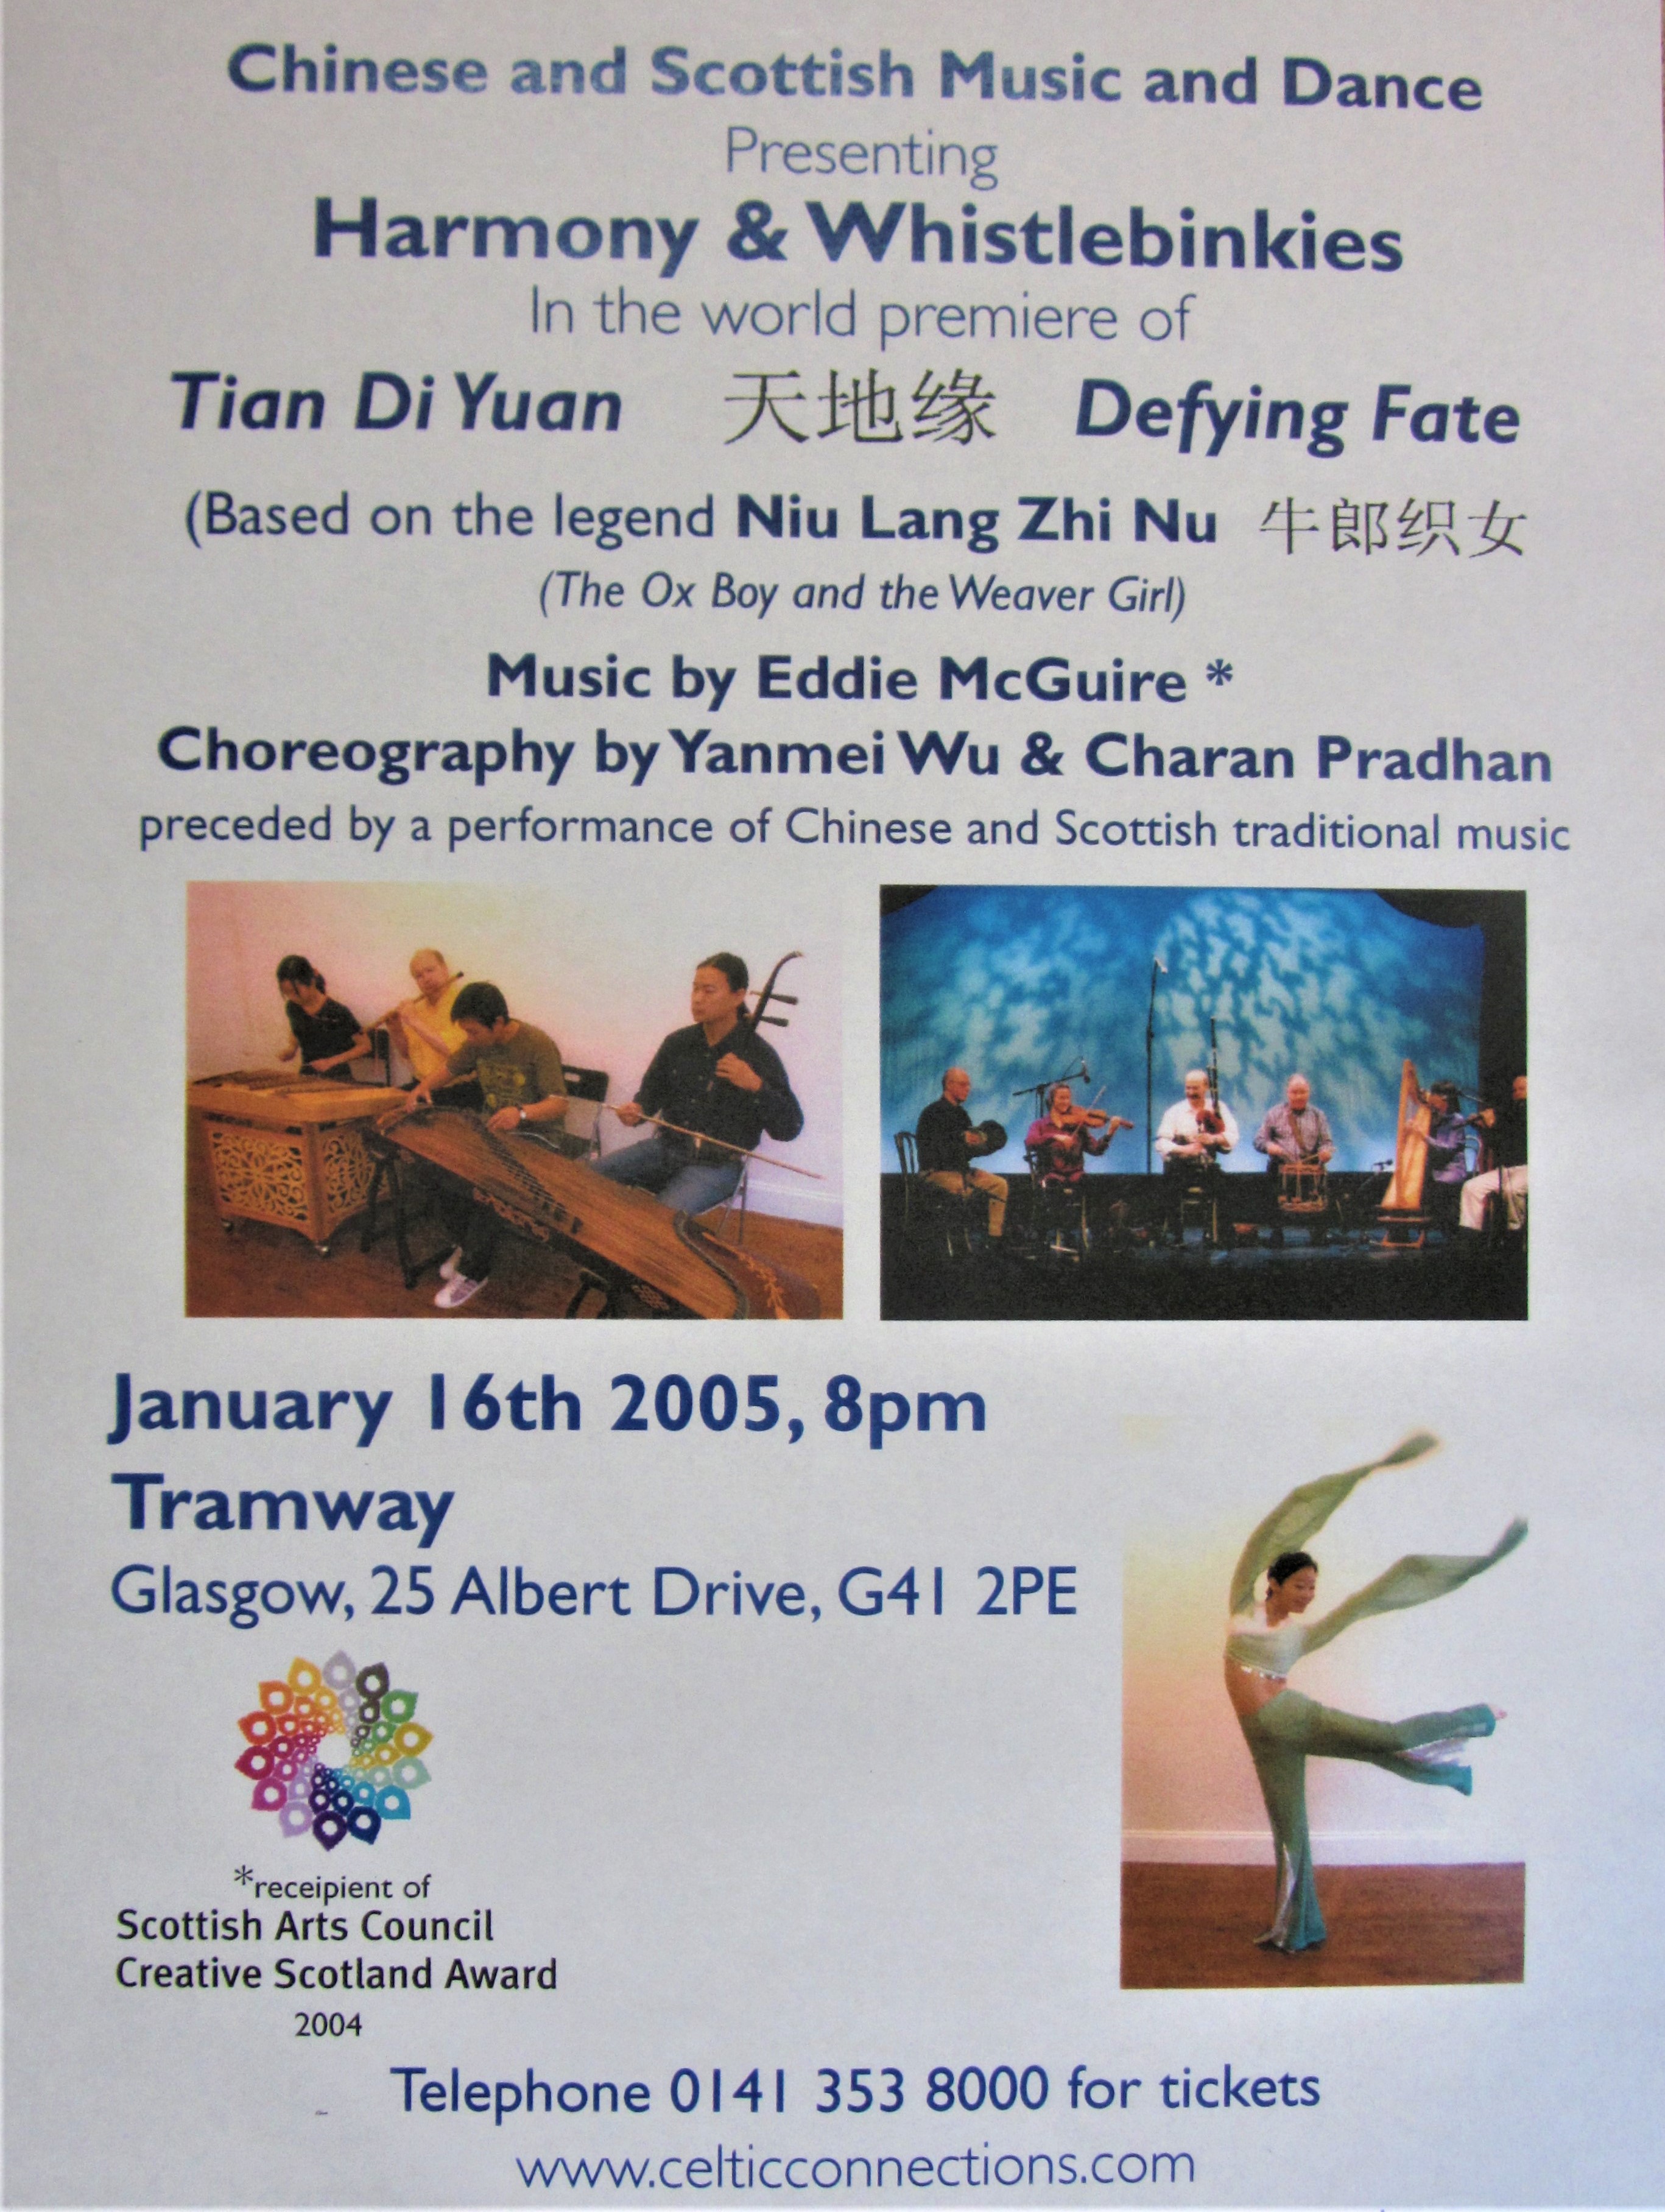 The Whistlebinkies & Harmony Ensemble premiered Tian Di Yuan (Ox Boy & Weaver Girl) in 2005